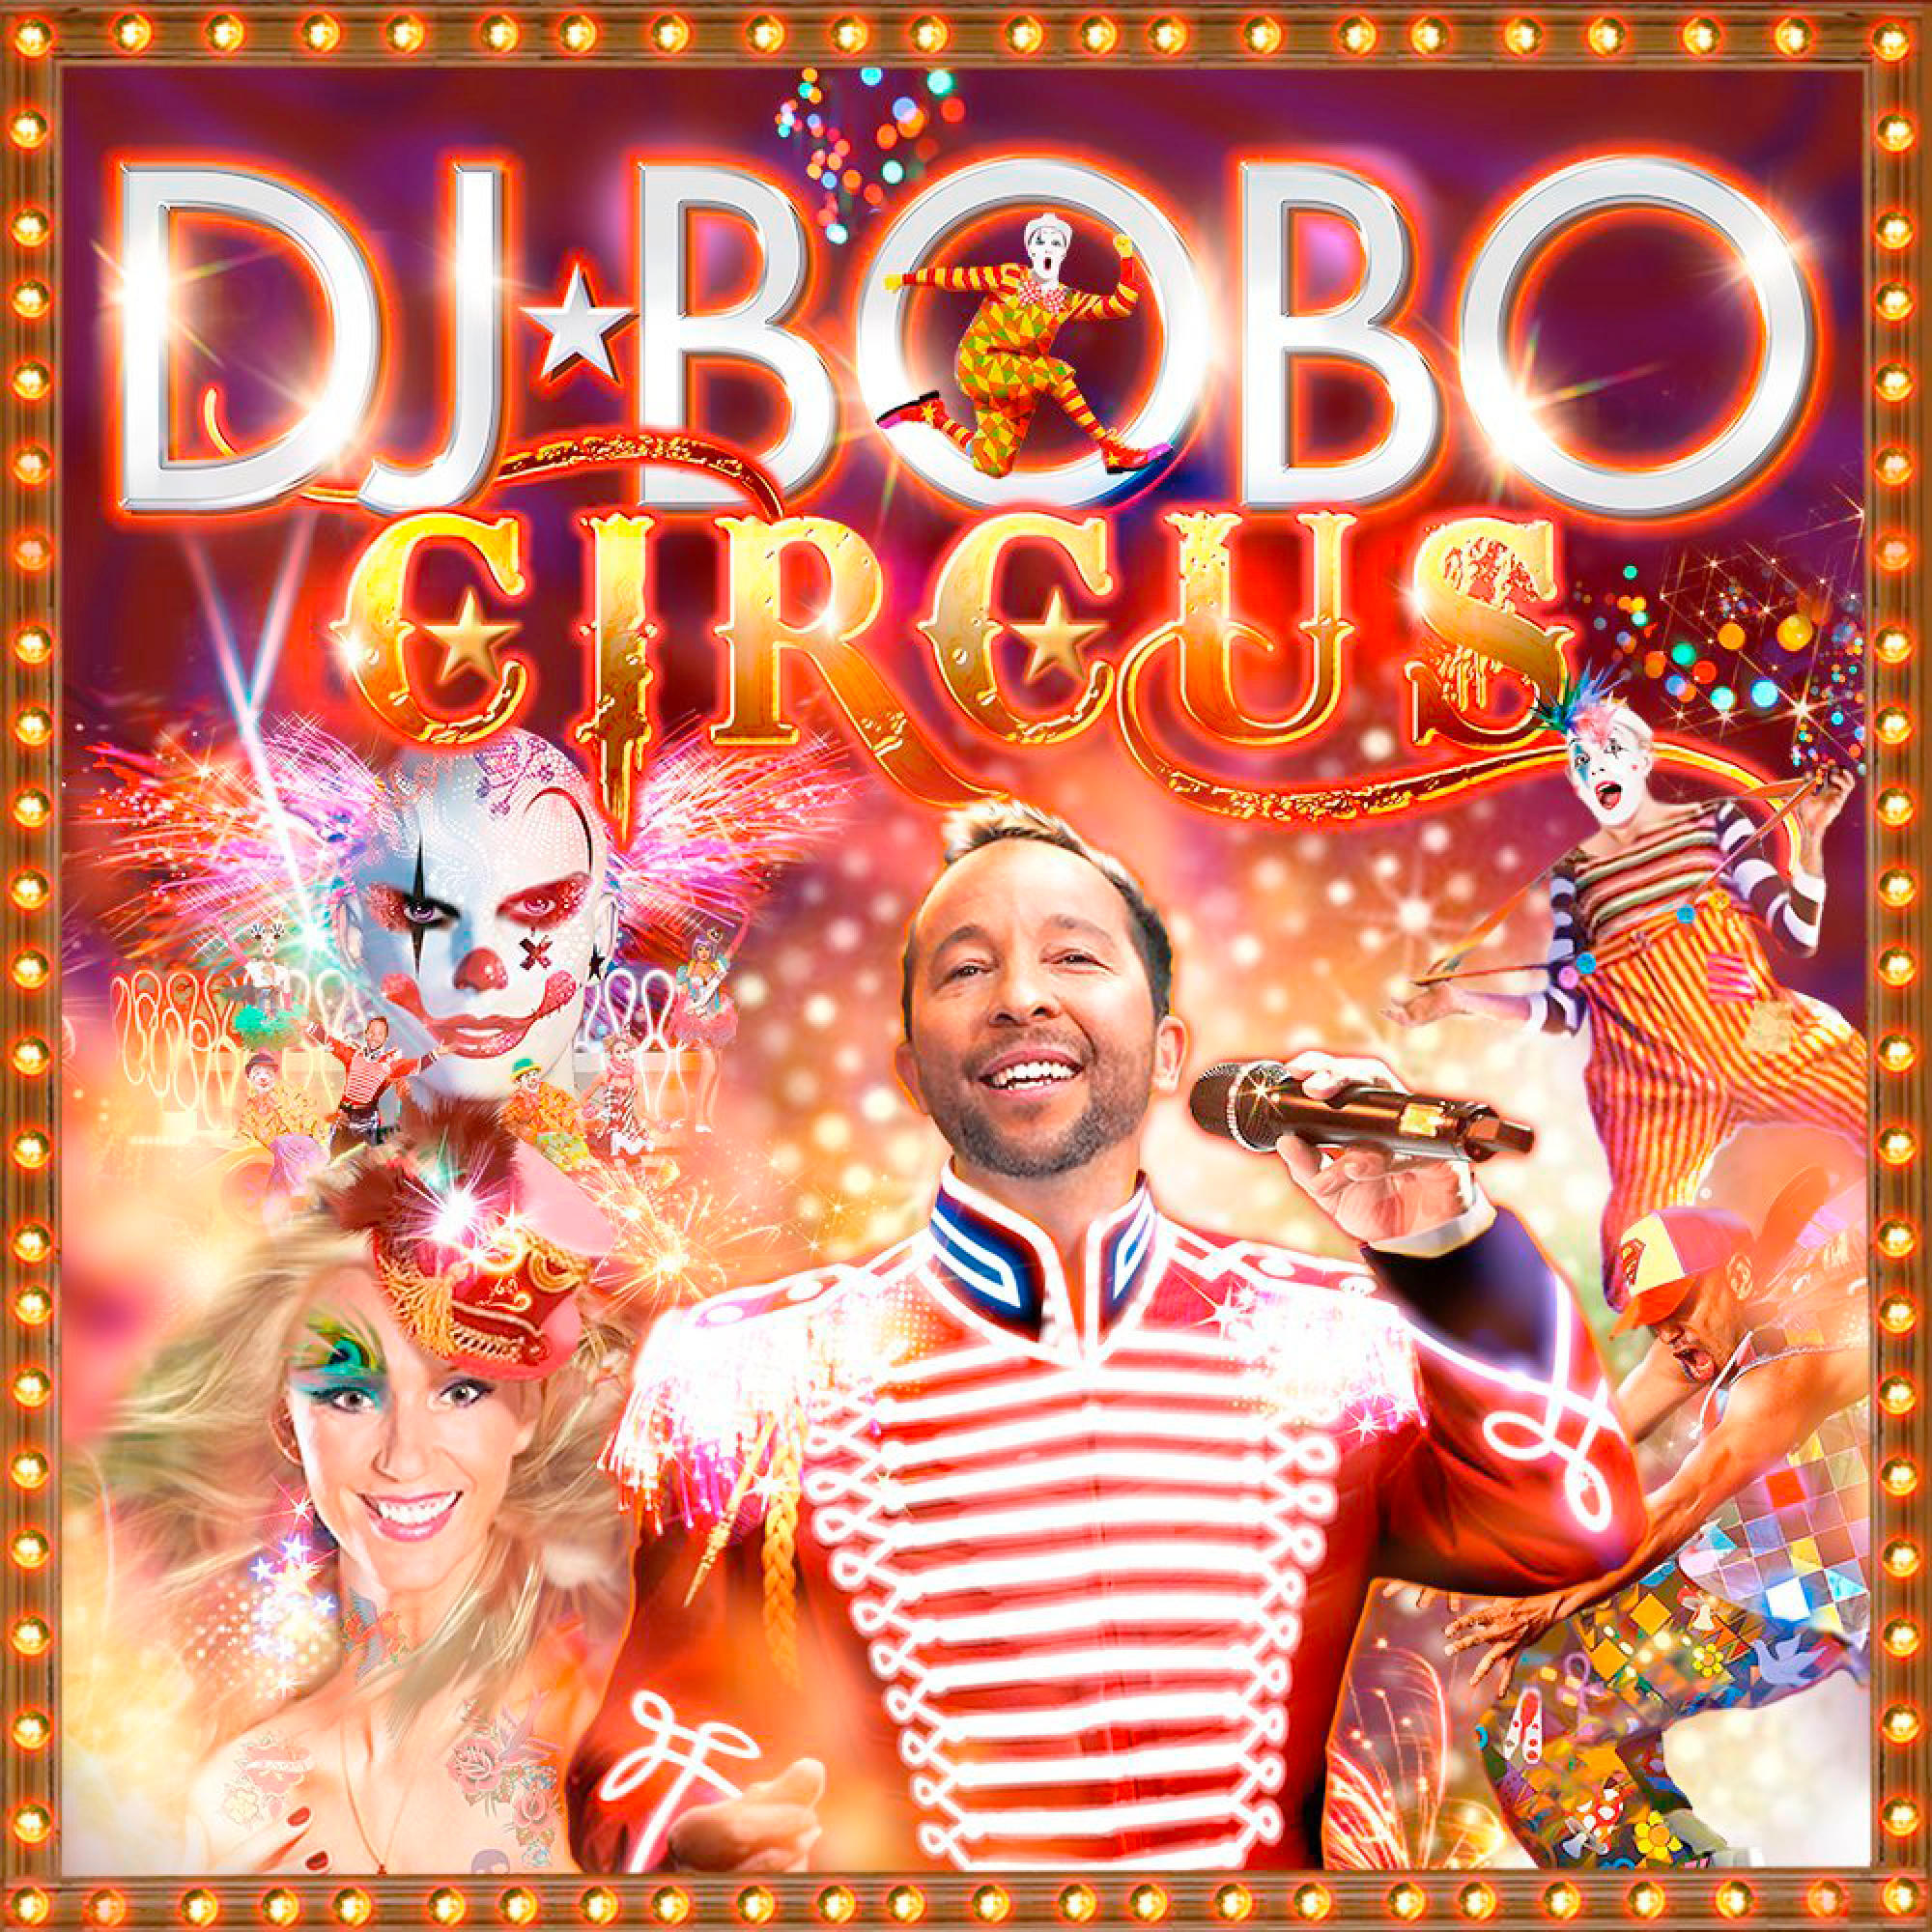 Video) - Circus DJ Bobo - + (CD DVD